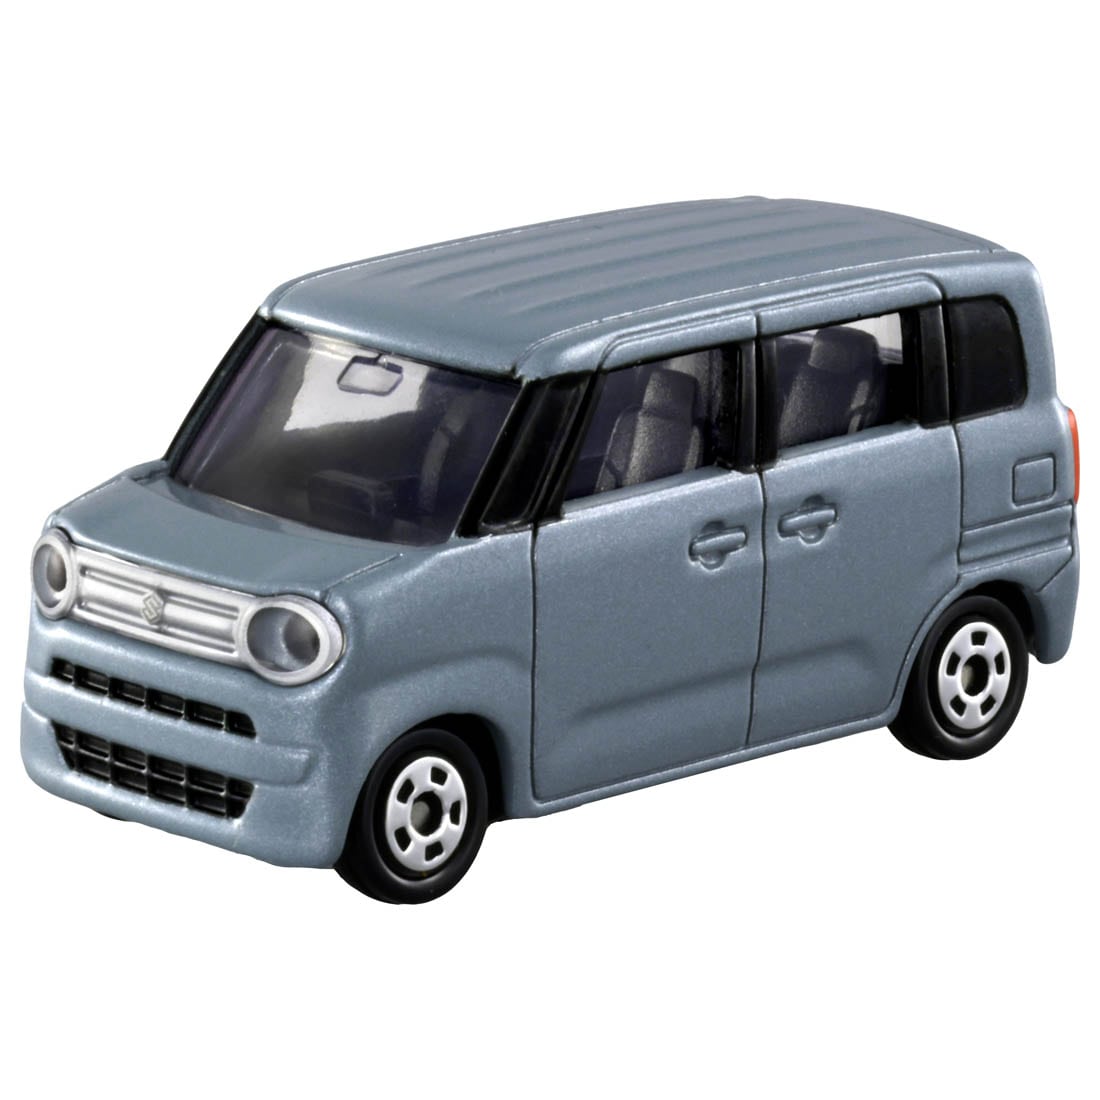 真愛日本 TOMY車 NO.81 鈴木WagonR 旅行車 模型小車 TAKARA TOMY TOMICA 收藏 擺飾